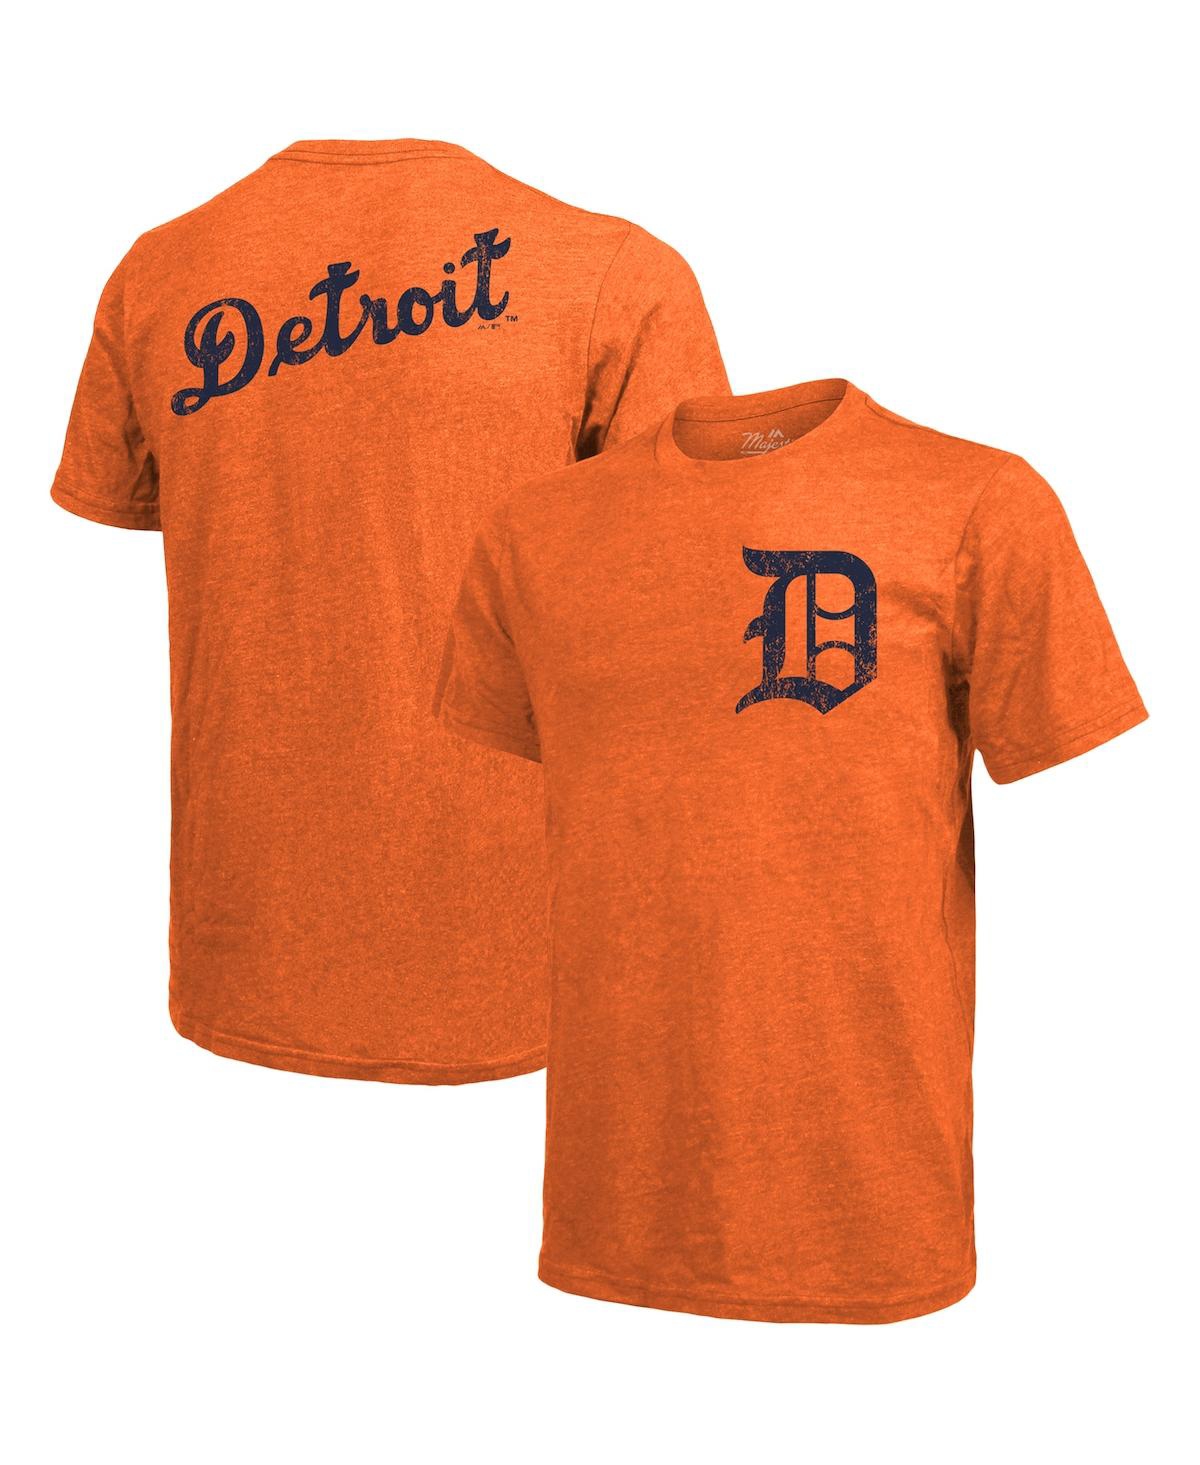 Men's Majestic Threads Orange Detroit Tigers Throwback Logo Tri-Blend T-shirt - Orange